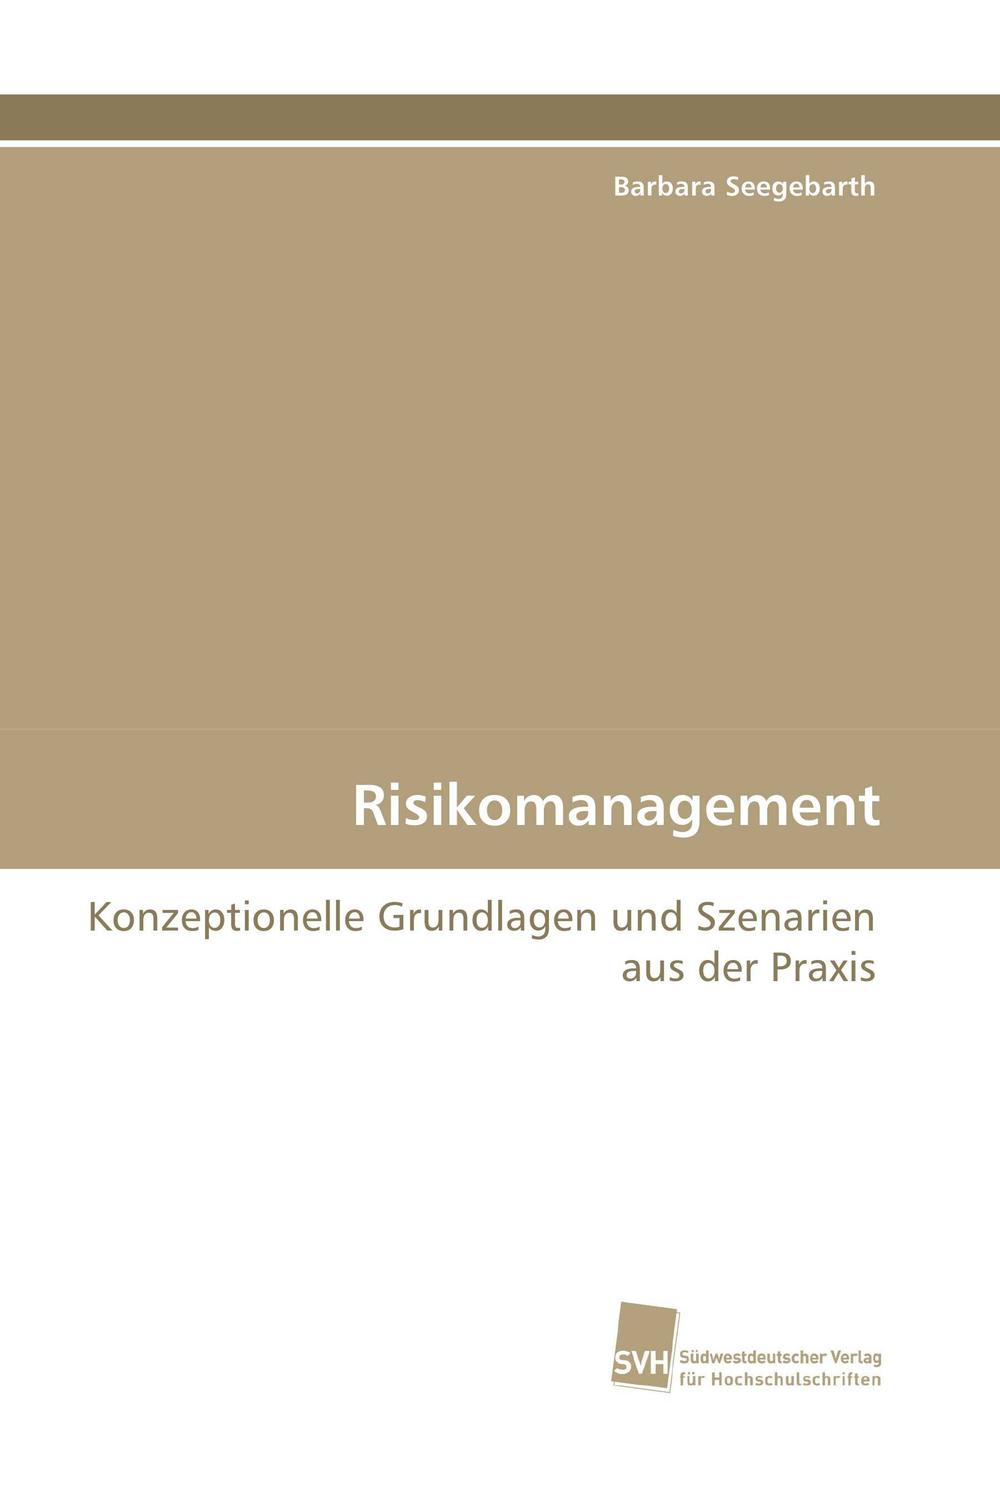 Risikomanagement - Barbara Seegebarth